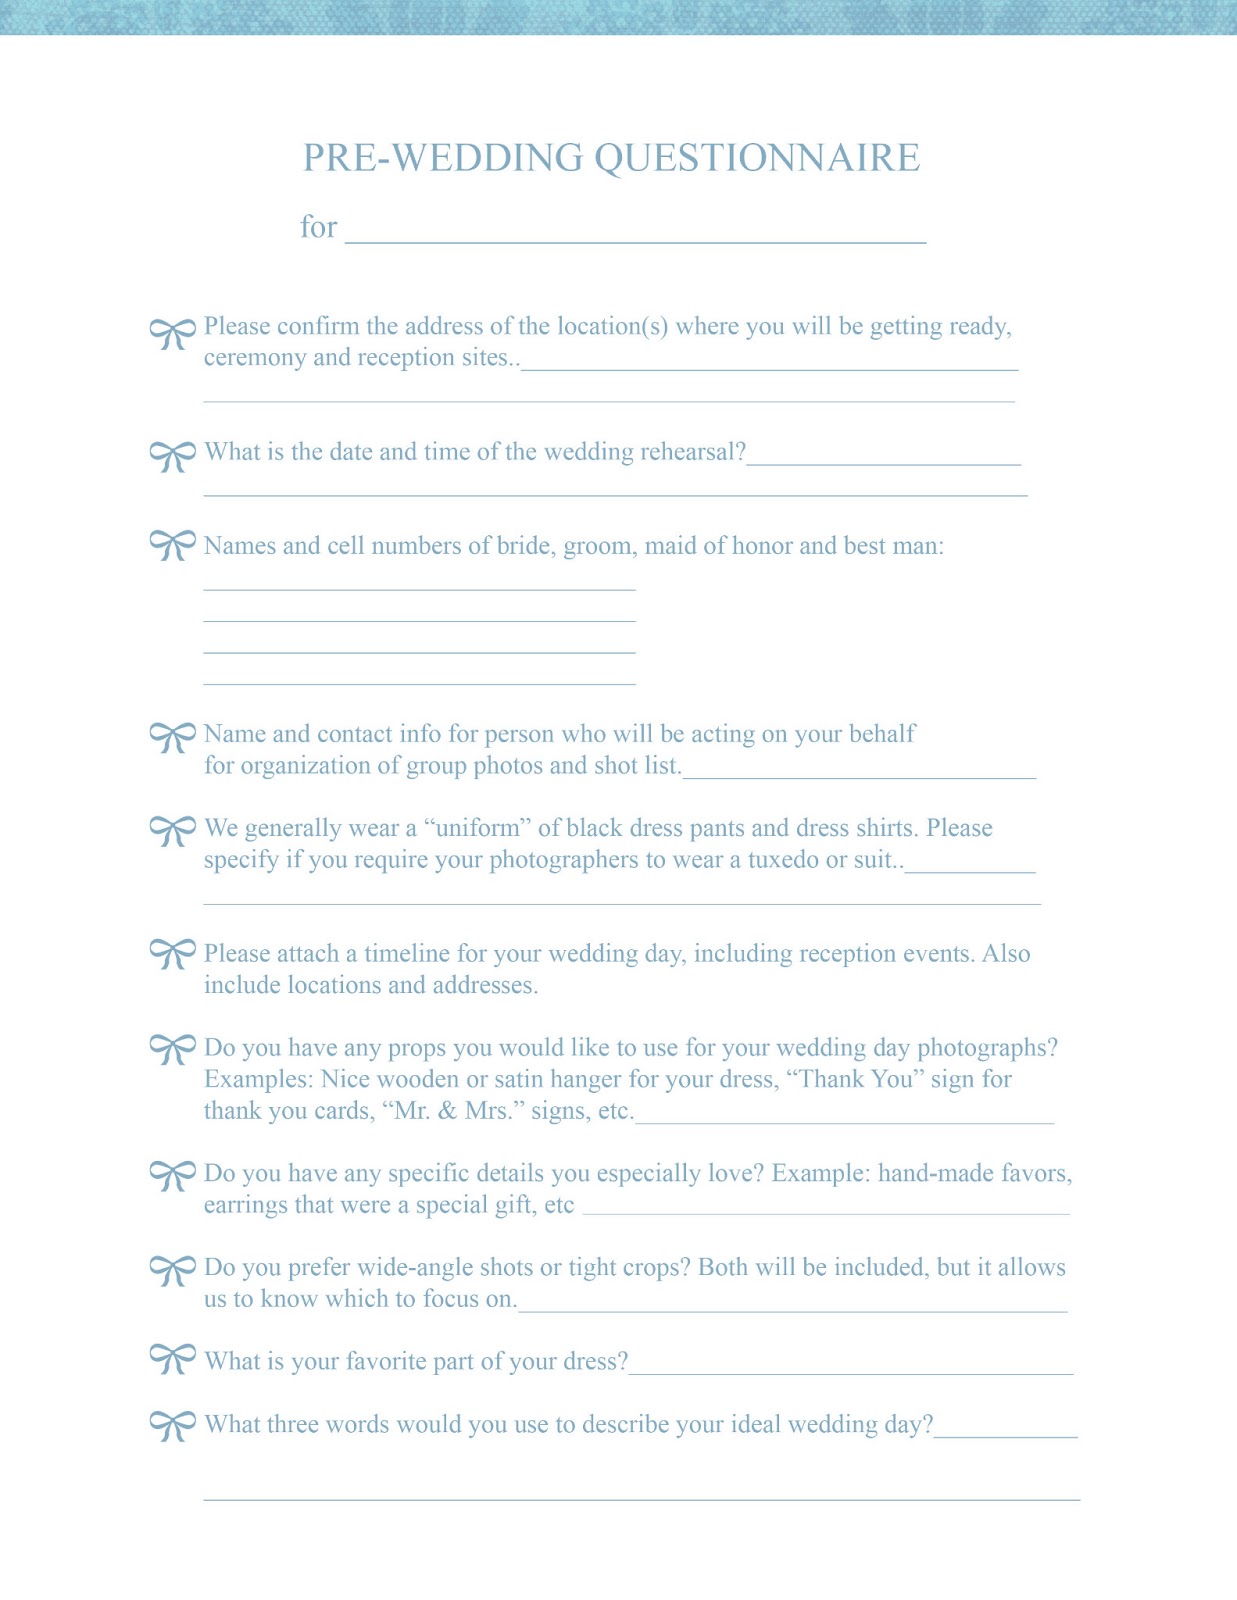 wedding-planner-questionnaire-template